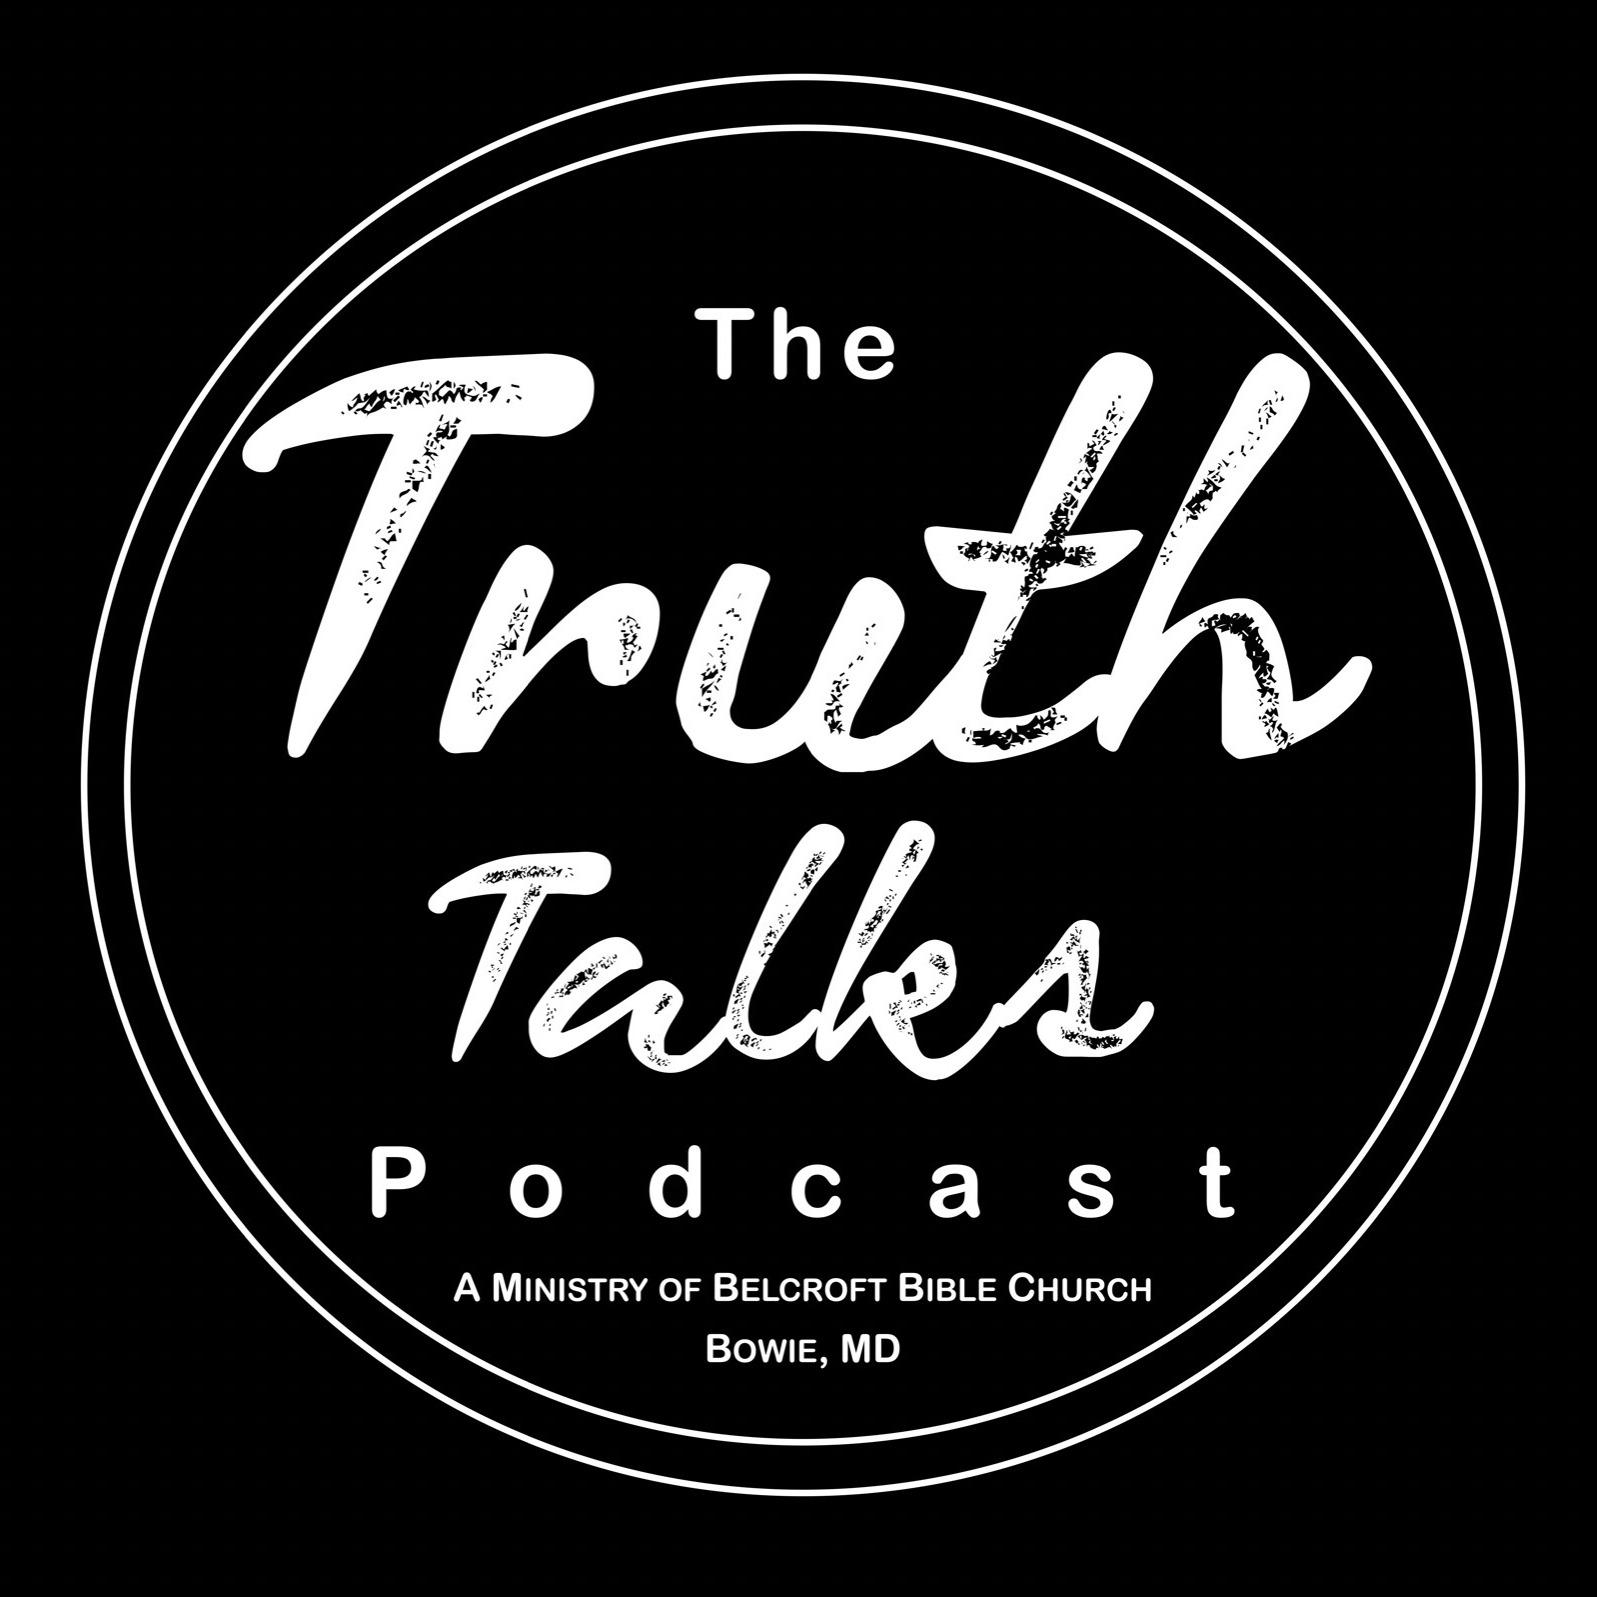 The Truth Talks Podcast